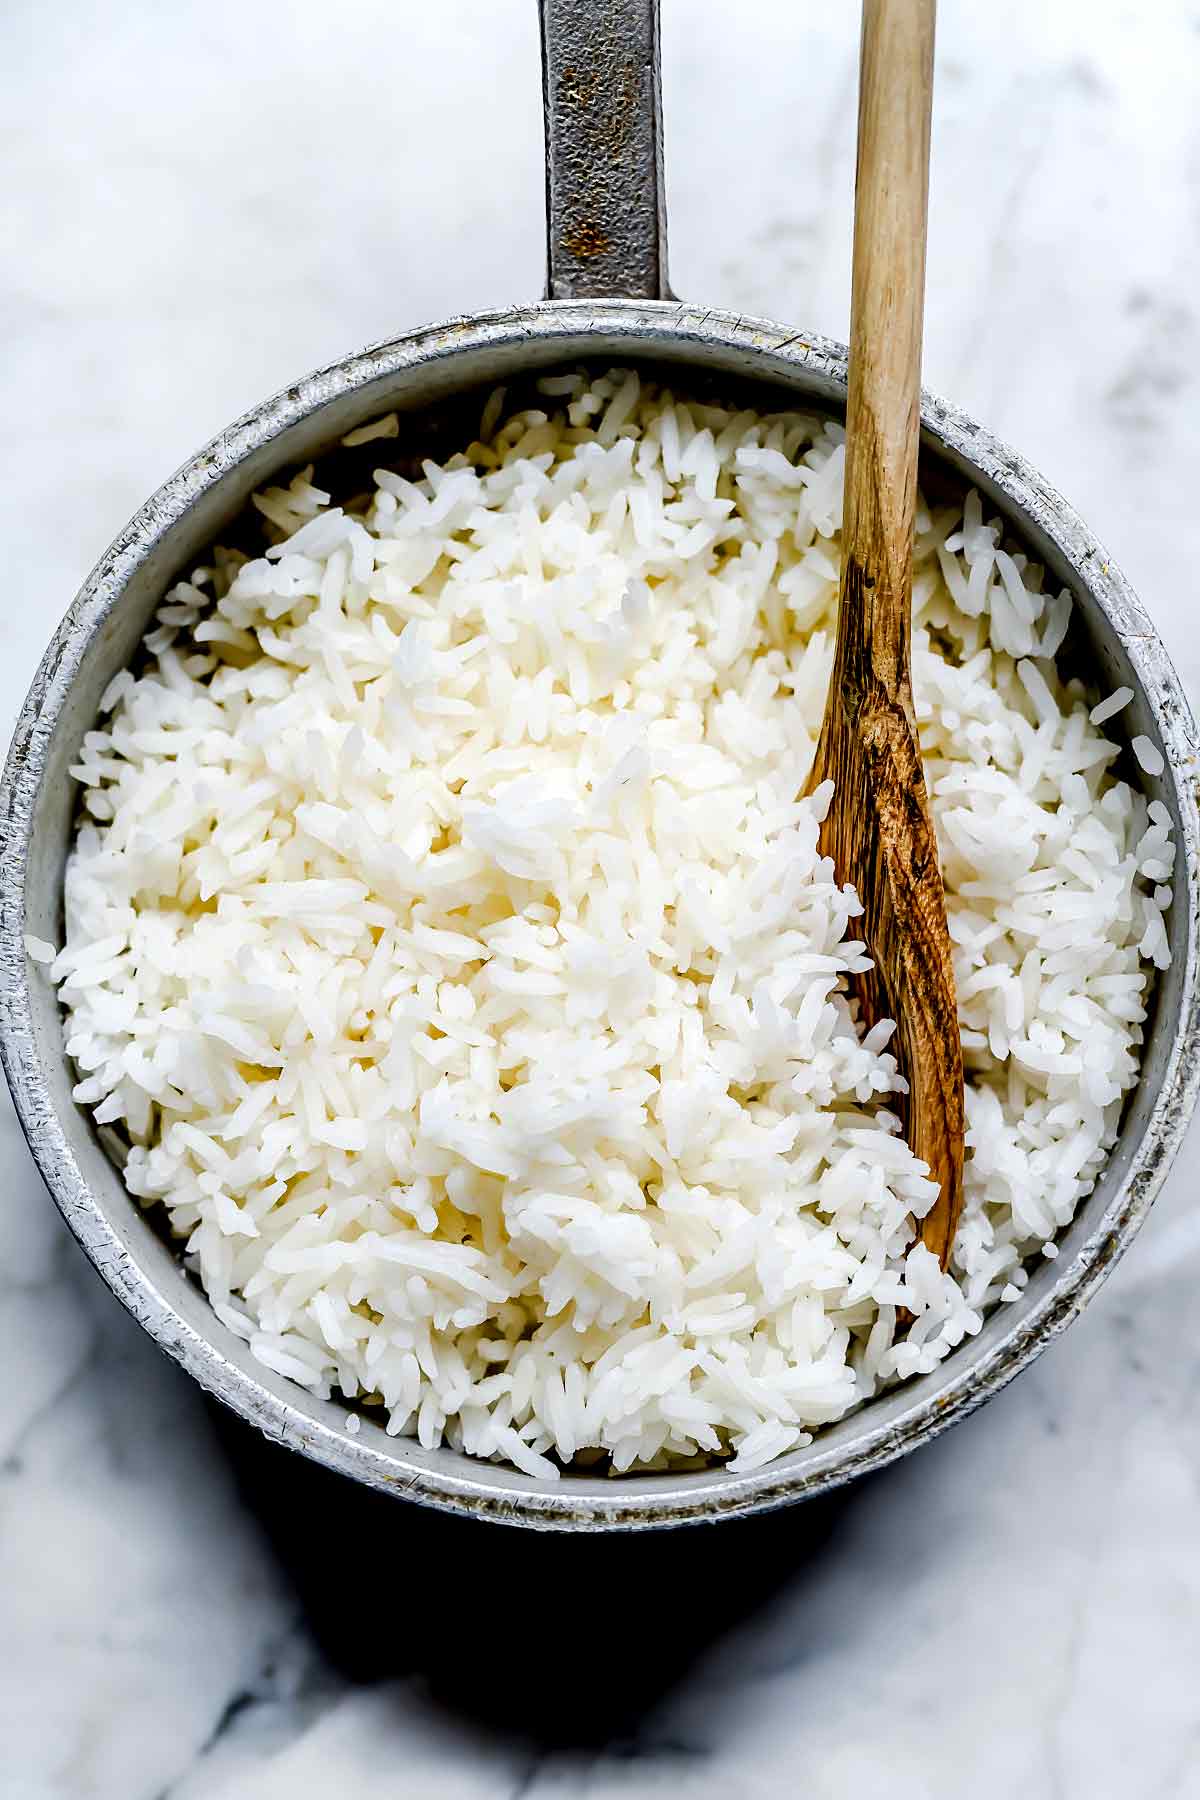 https://www.foodiecrush.com/wp-content/uploads/2021/03/How-to-Cook-Rice-foodiecrush.com-005-2.jpg